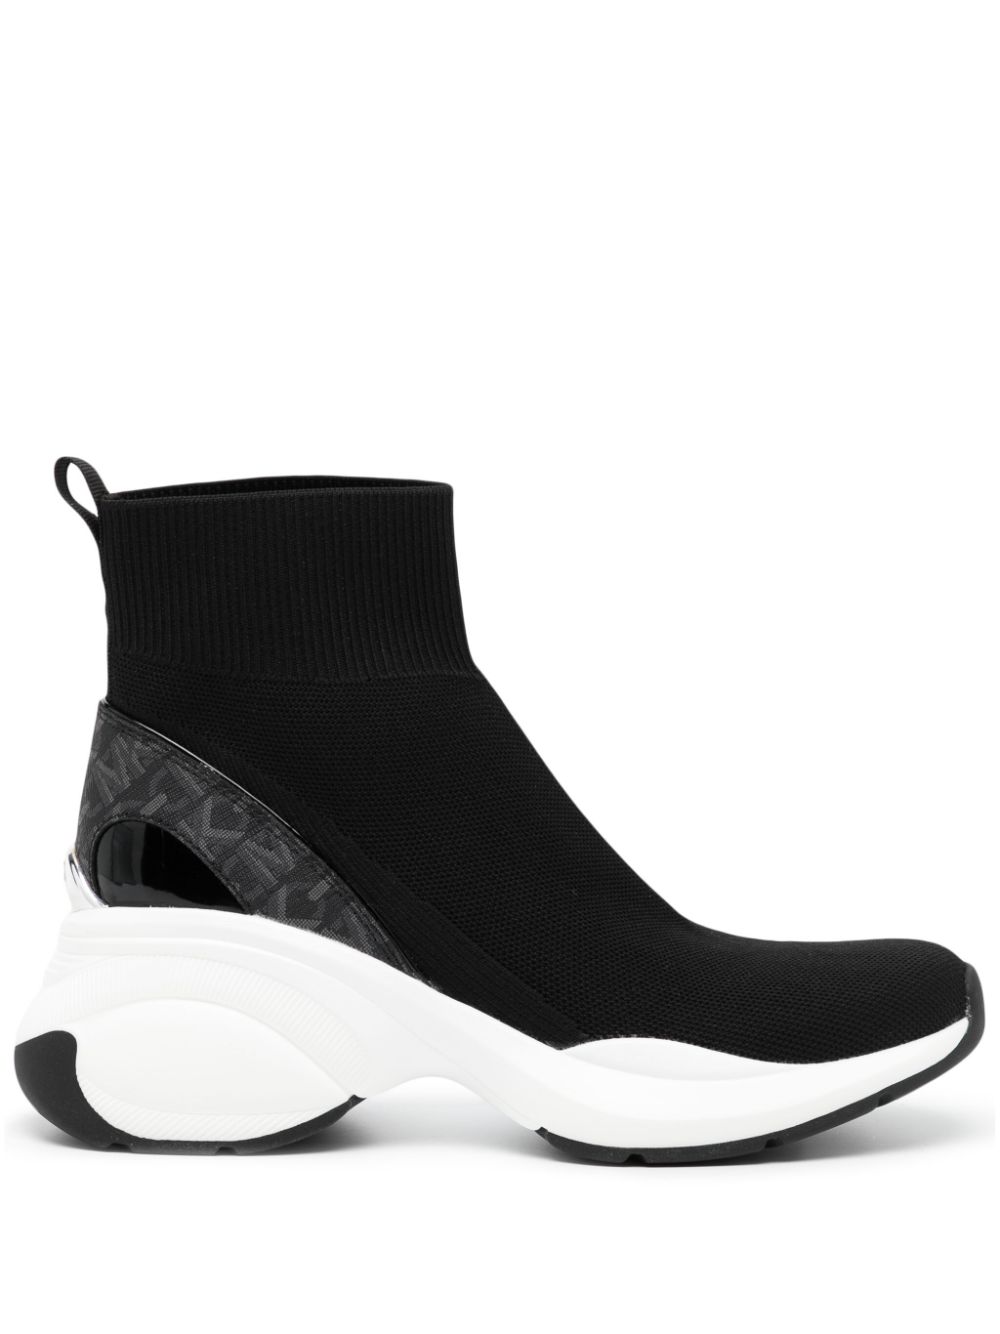 Michael Kors Zumma sock-style sneakers - Black von Michael Kors